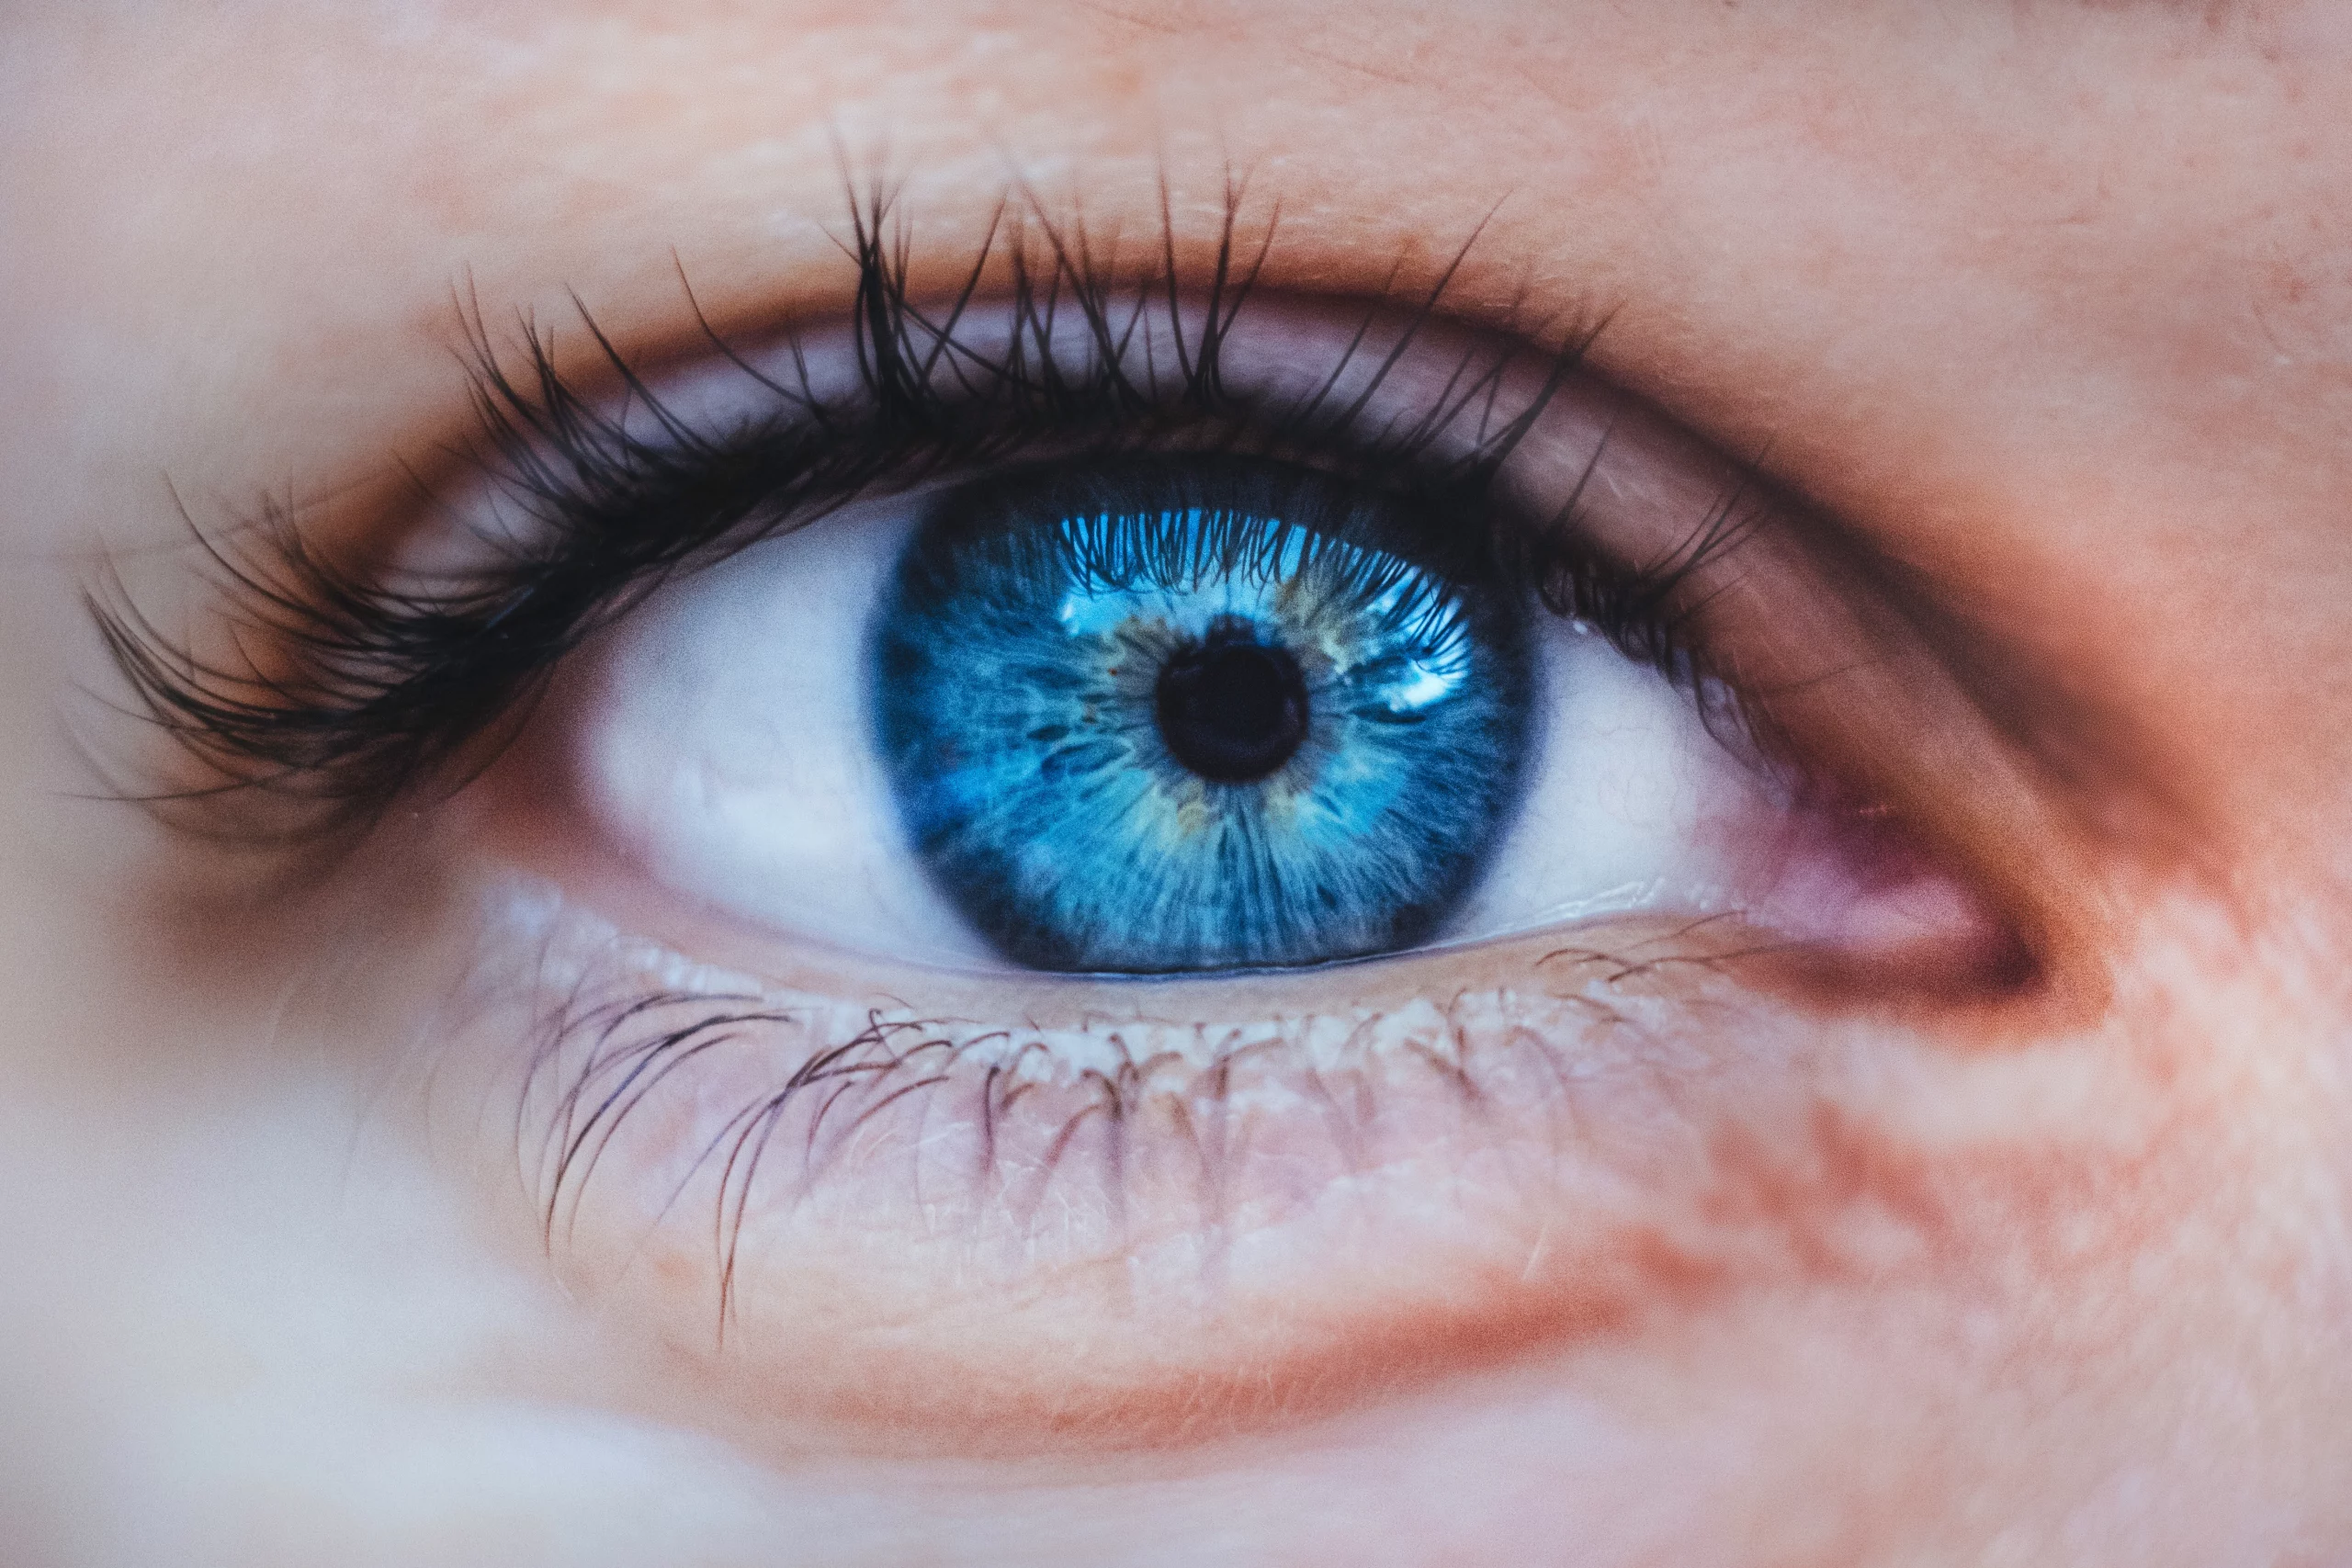 EMDR Eye Movement Desensitization Reprocessing